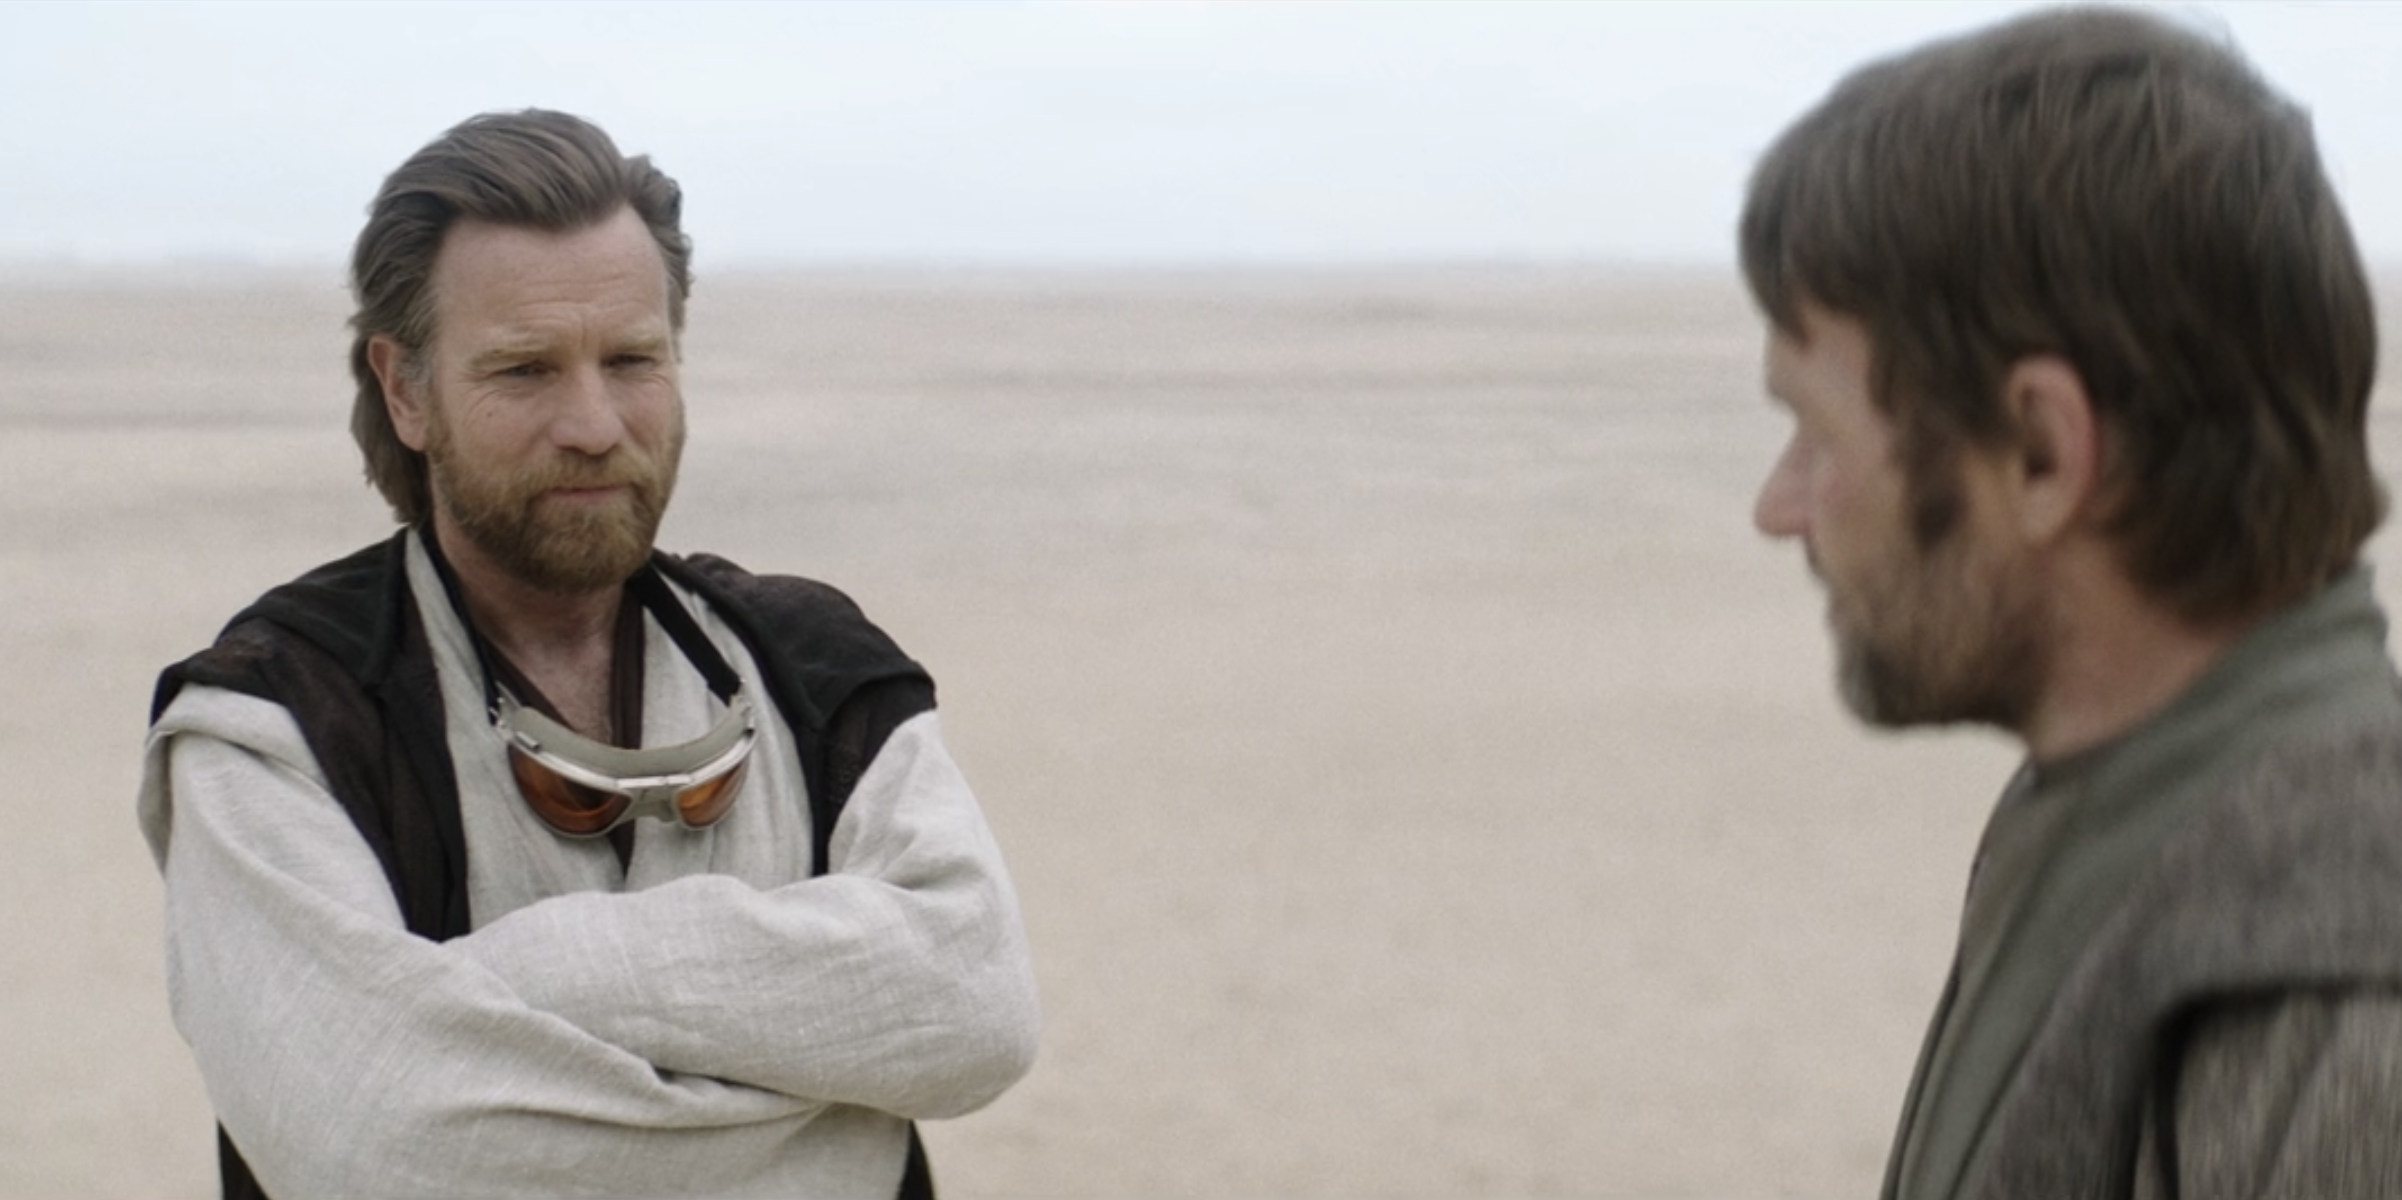 Obi-Wan Kenobi' Actor Reportedly Eyed for New Marvel Role - Inside the Magic